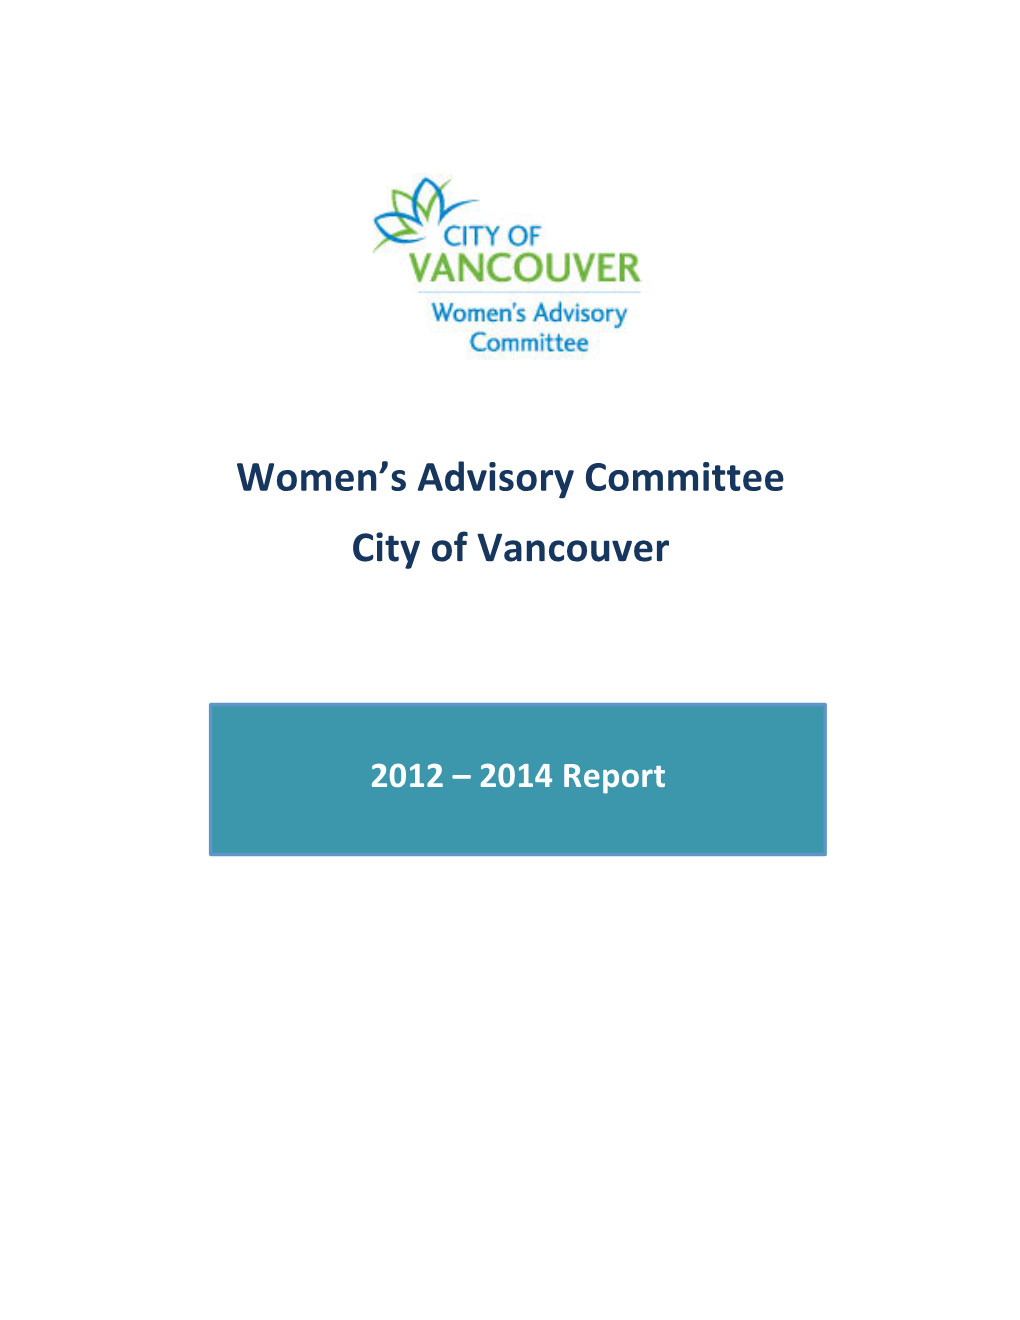 City of Vancouver Women's Advisory Committee